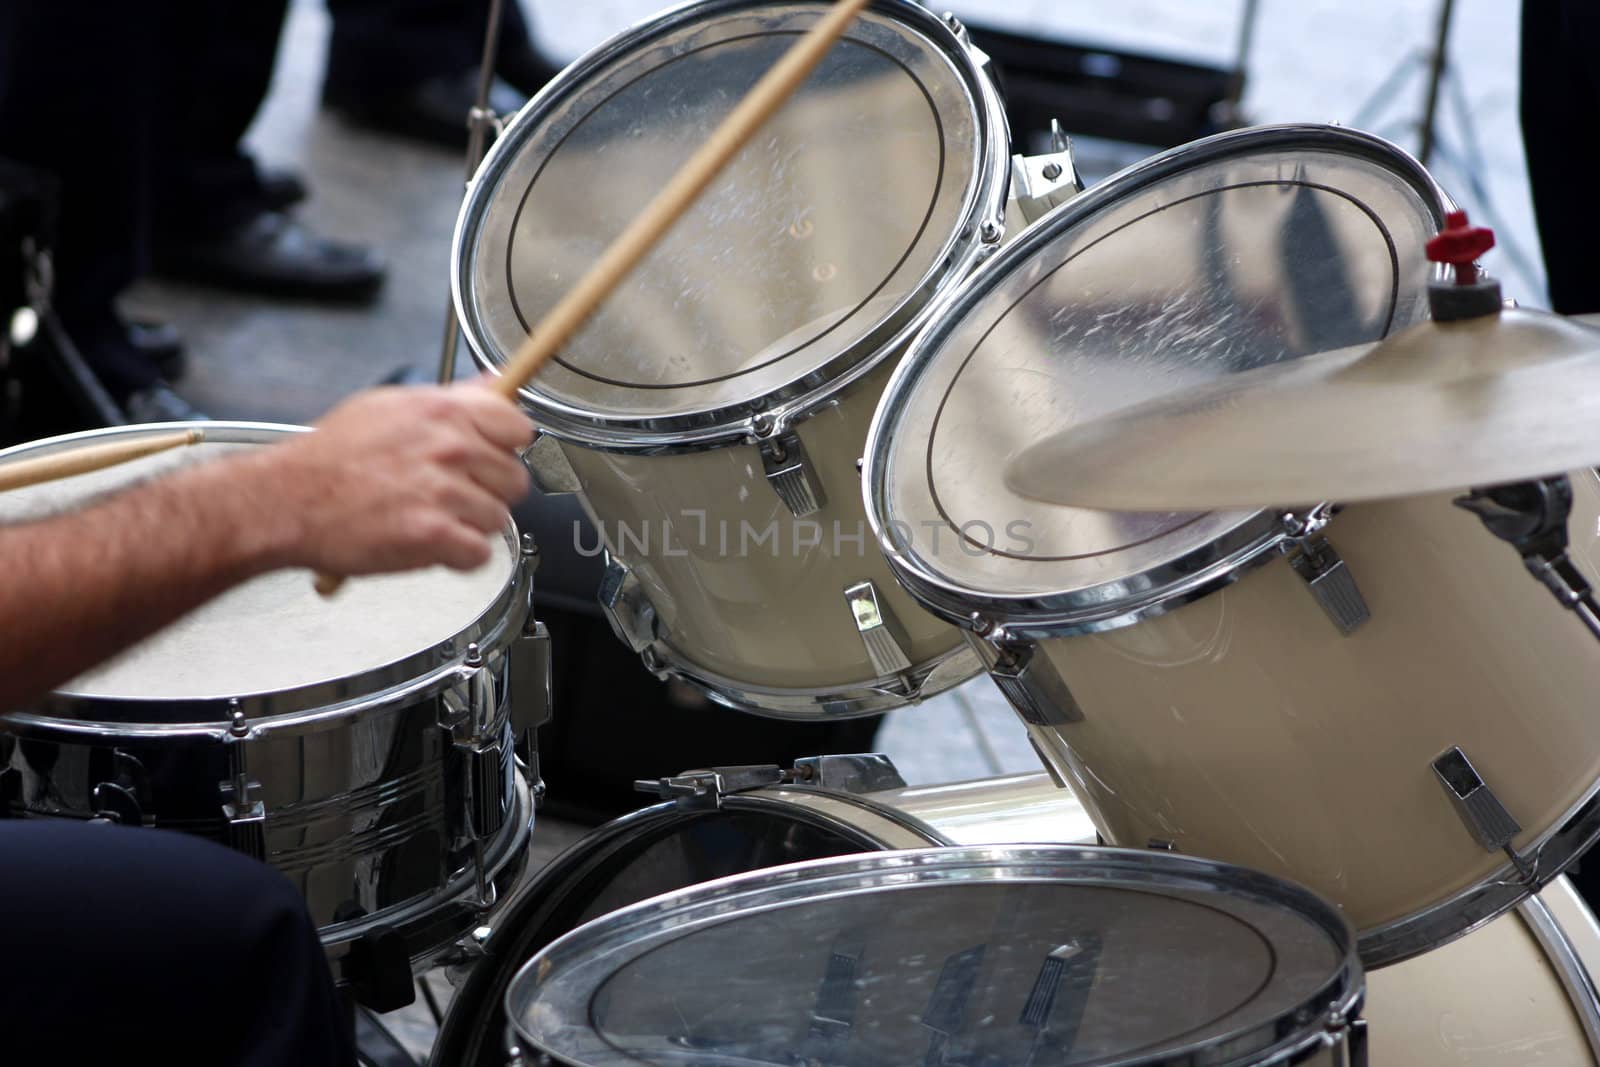 Drummer boy by Imagecom